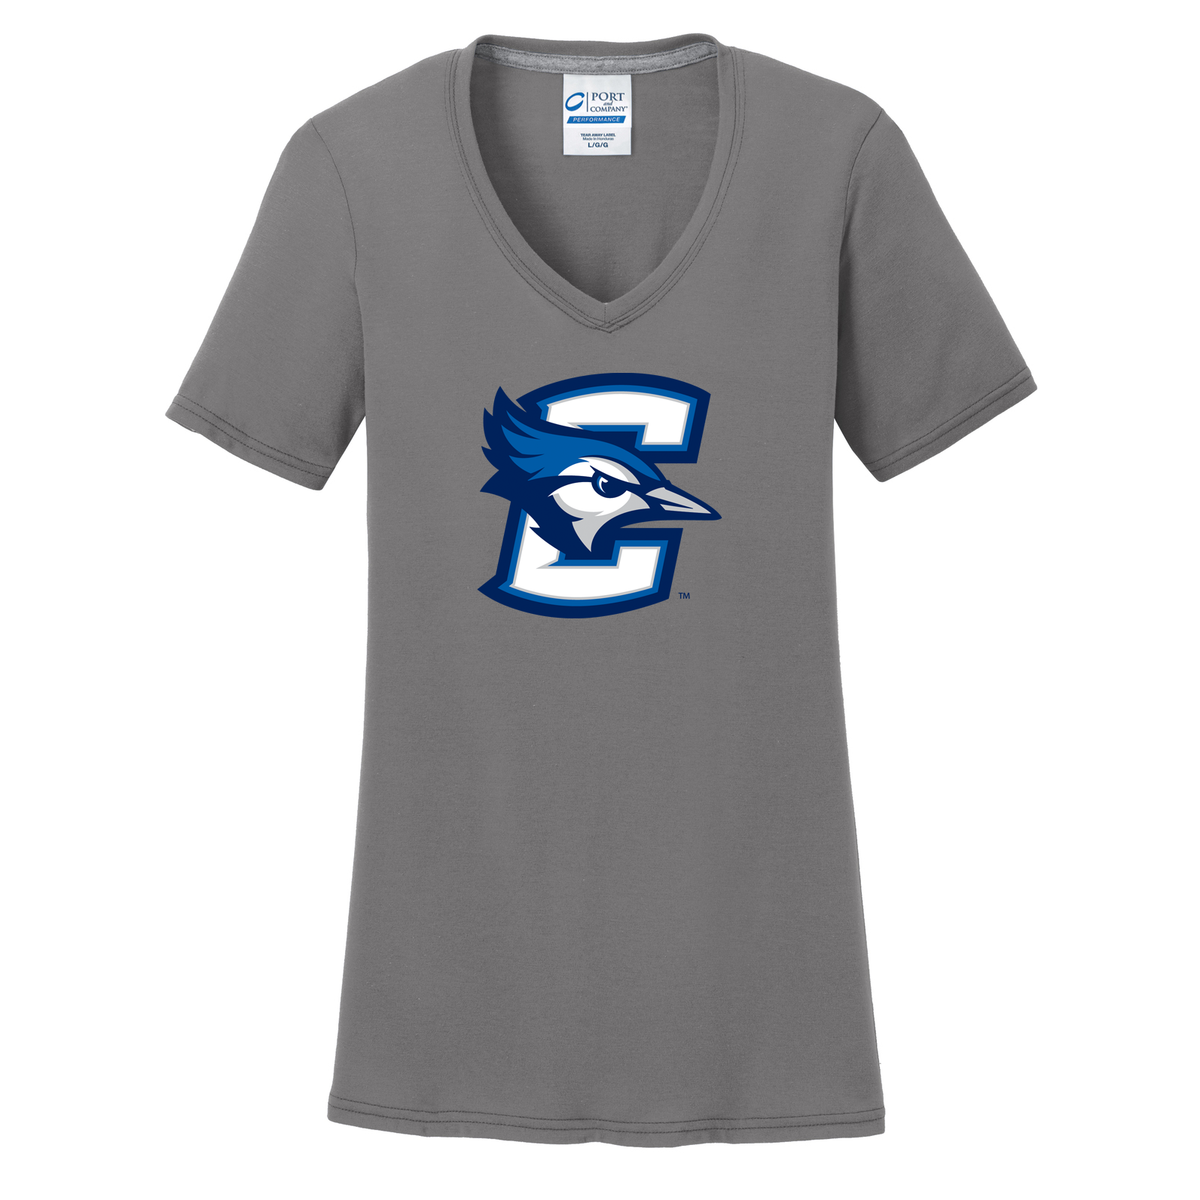 Creighton University Lacrosse Women's T-Shirt